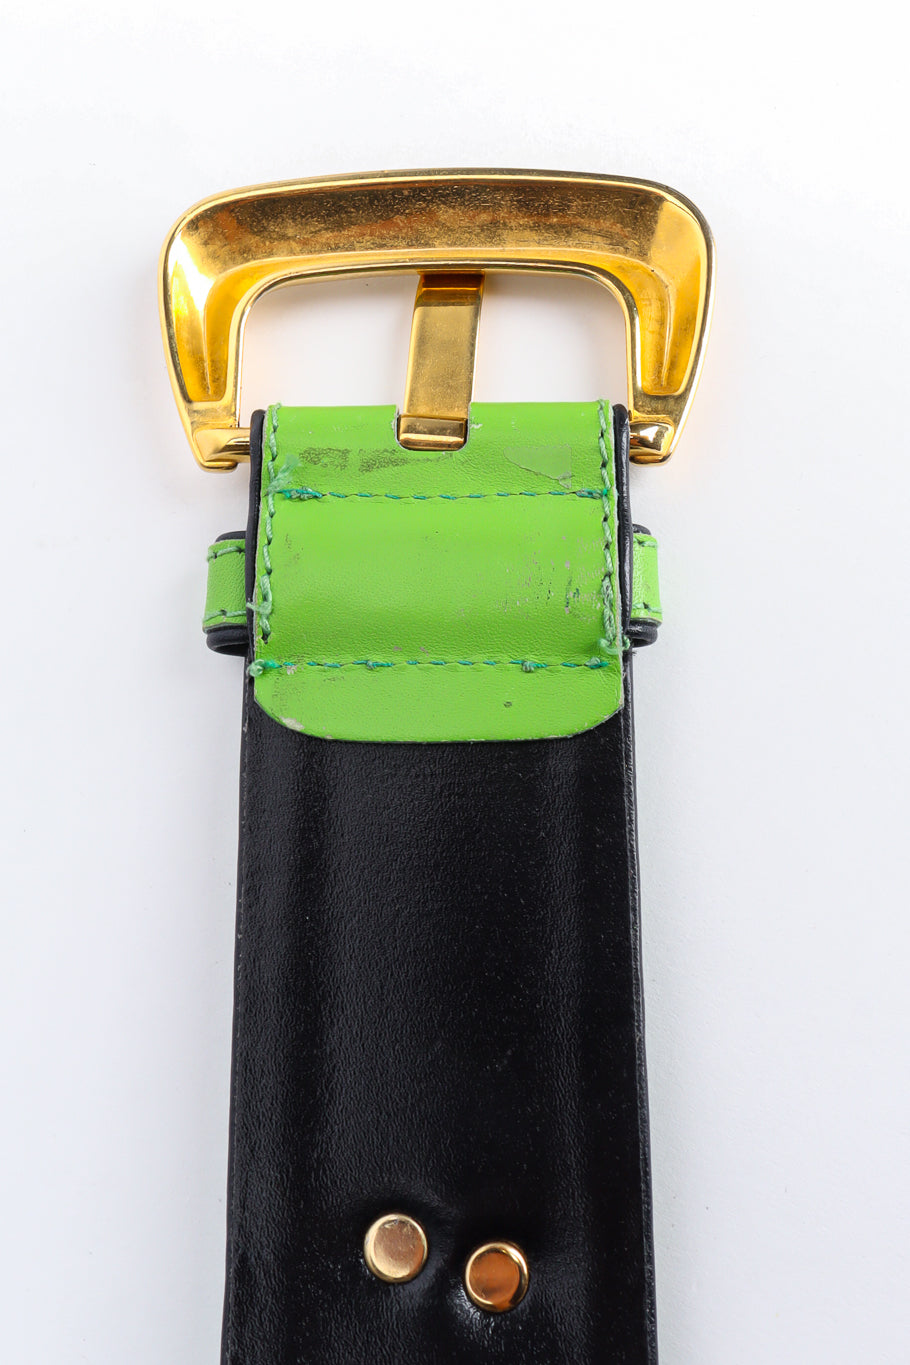 panther studded leather belt by Escada inside buckle @recessla